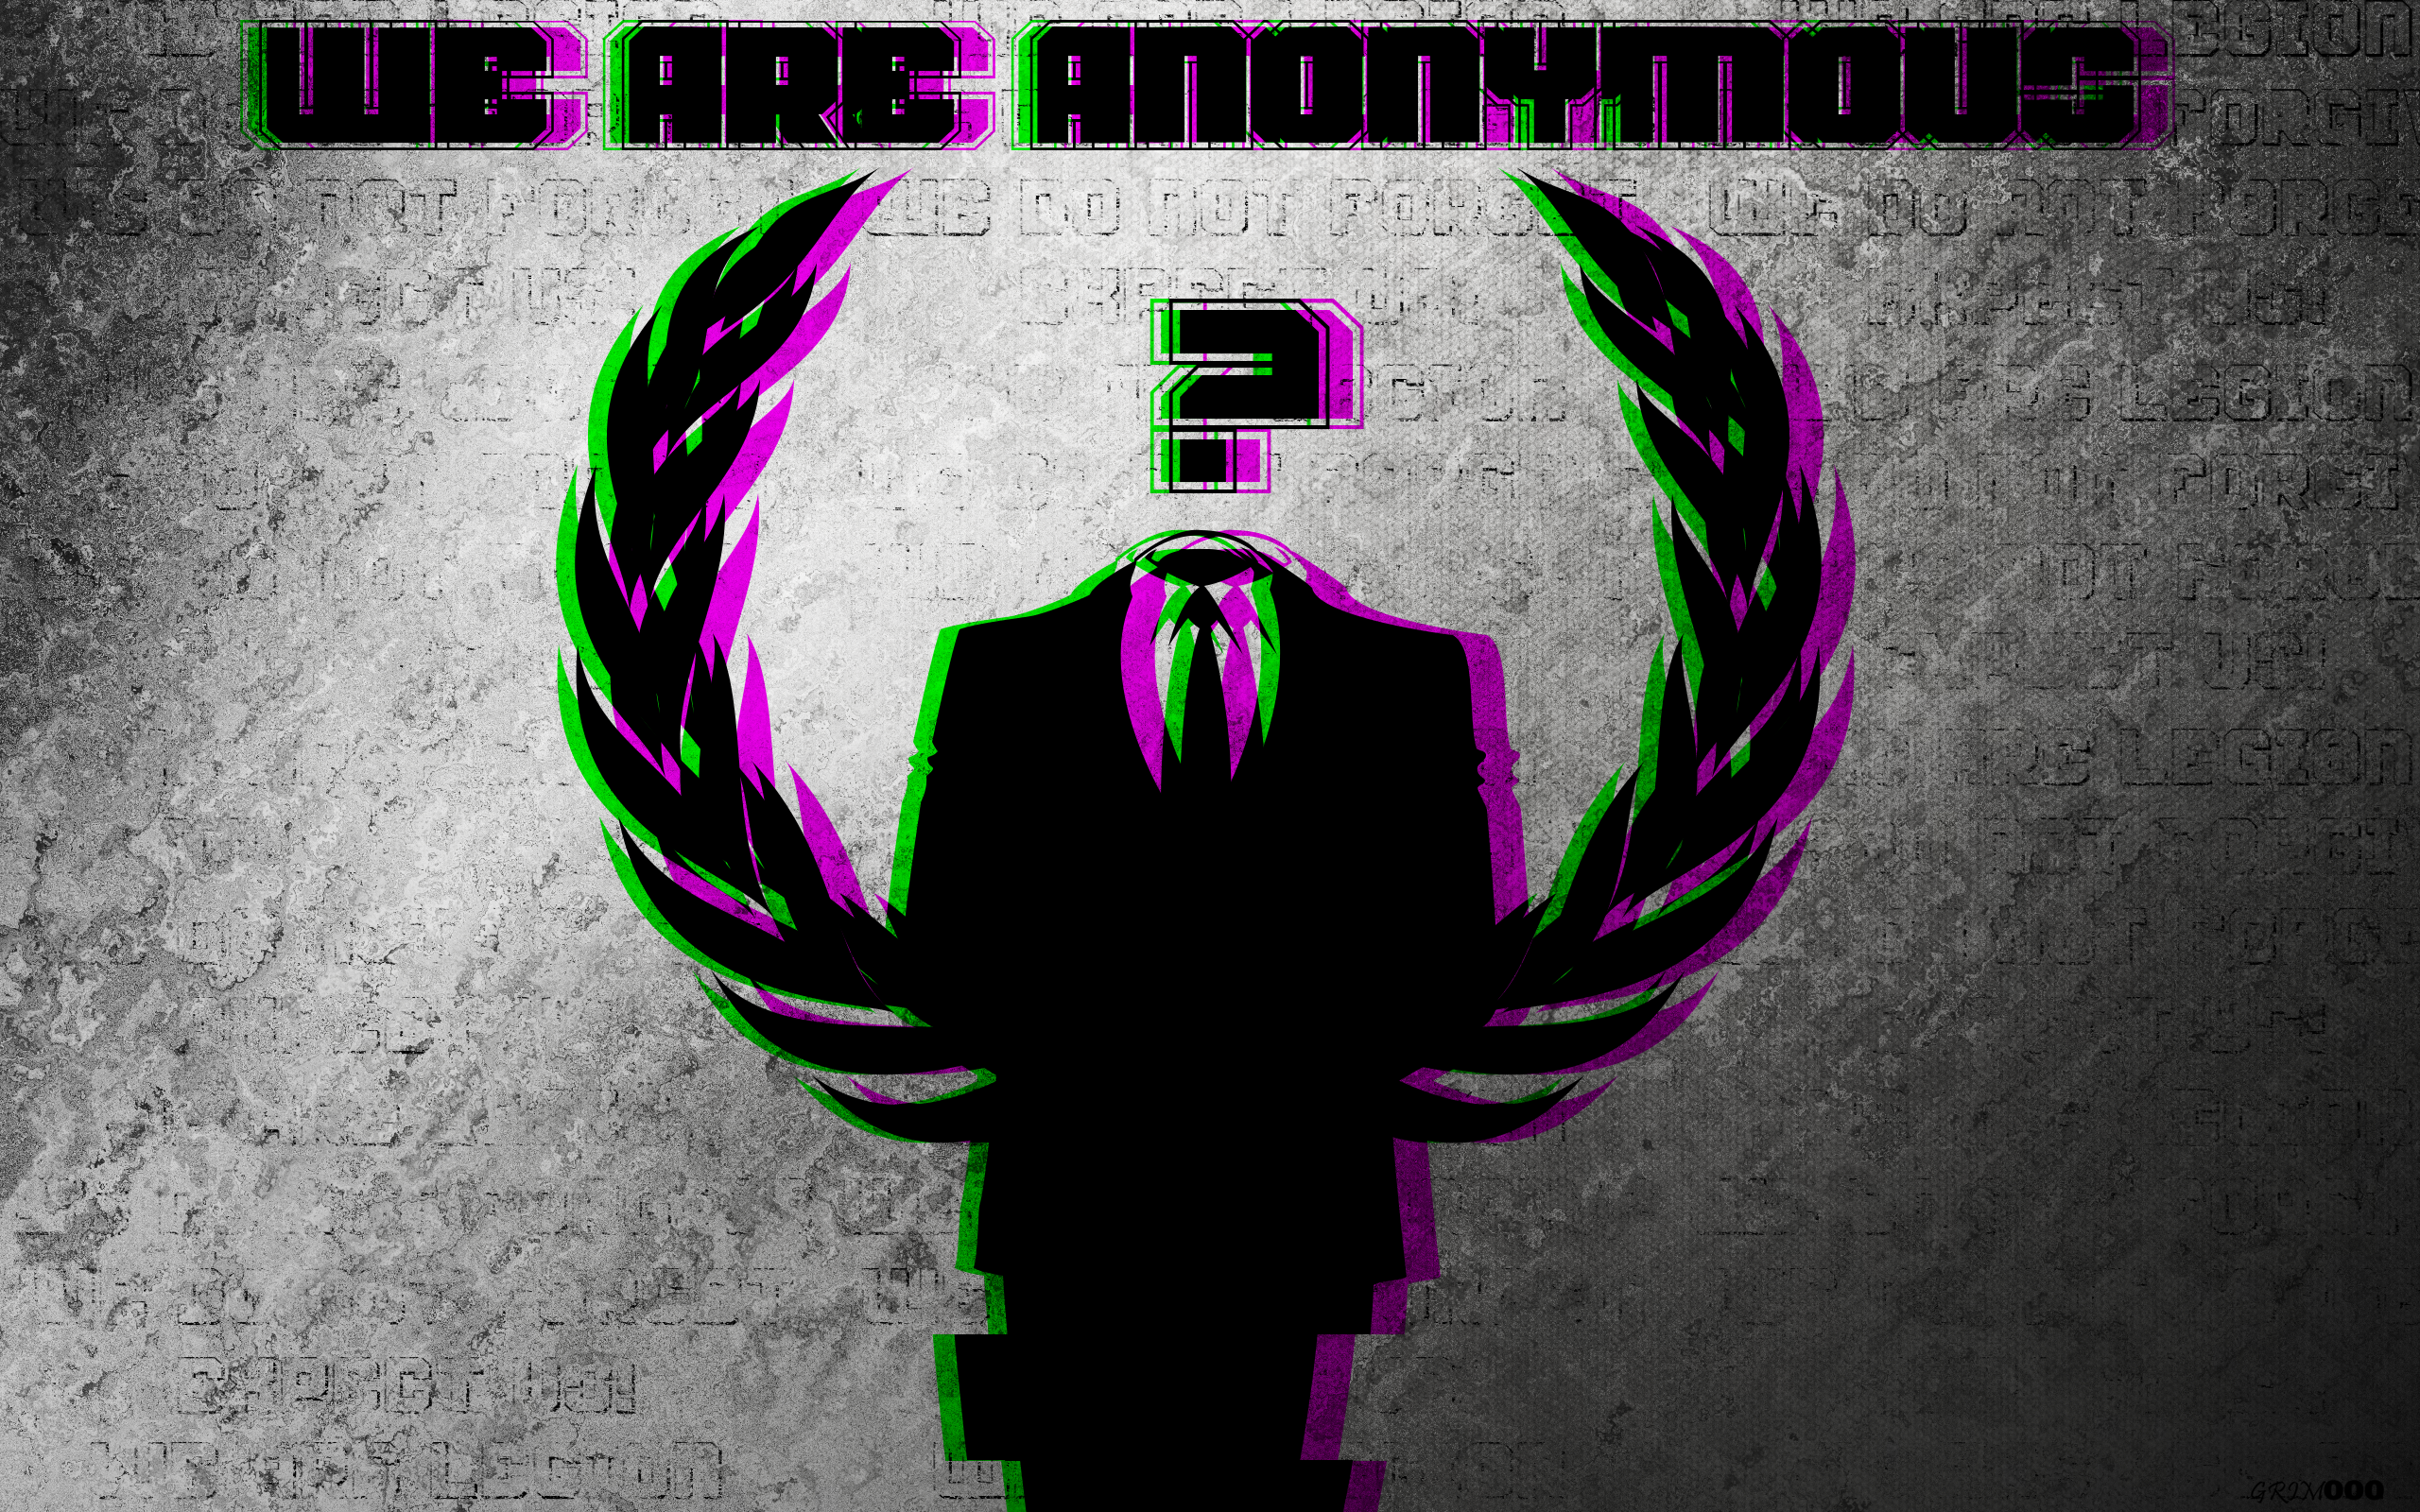 General 2560x1600 minimalism Anonymous (hacker group) grunge simple background glitch art synthwave digital art